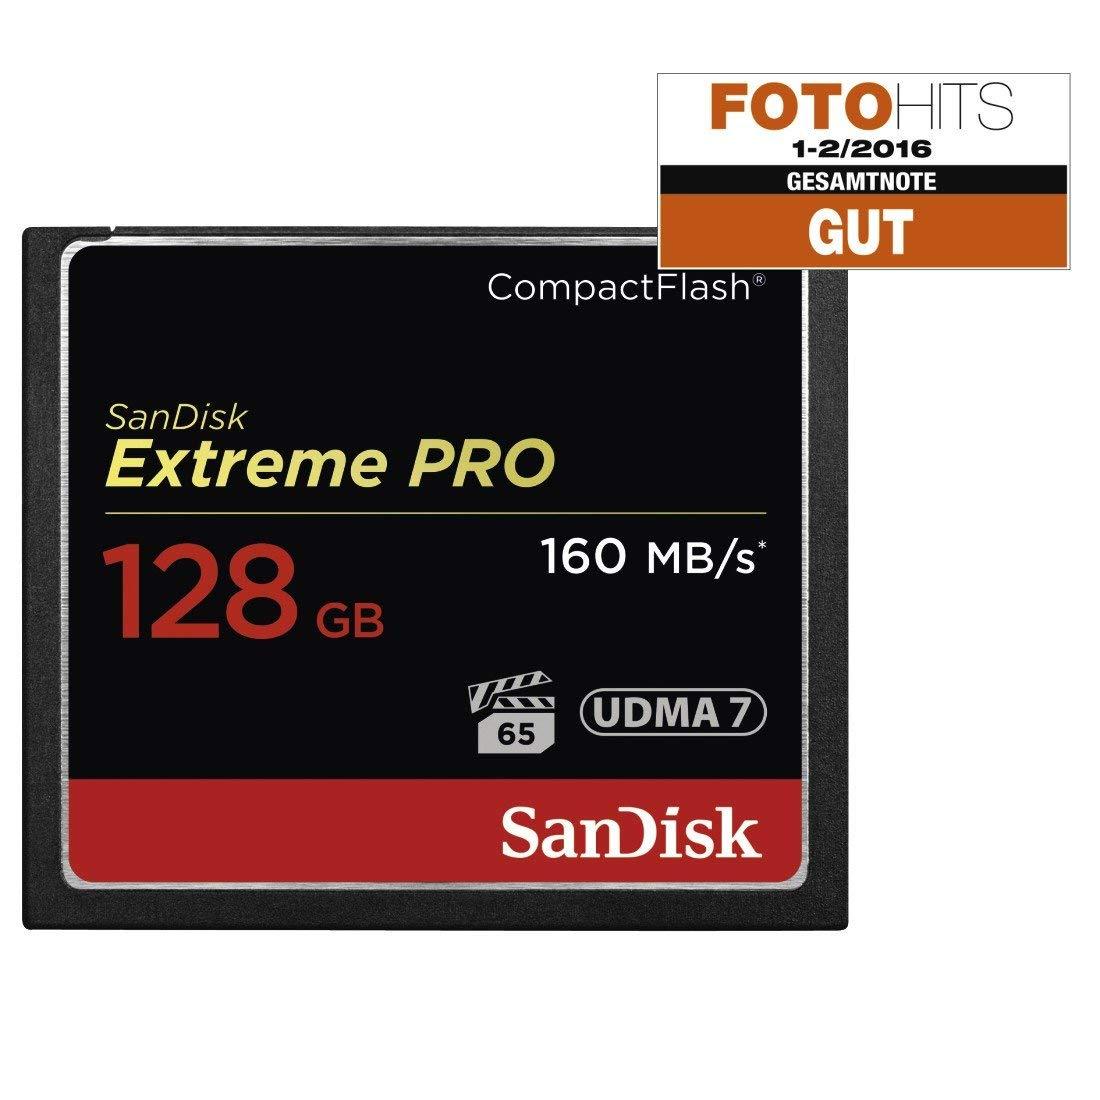 SanDisk Extreme PRO 128 GB /ОРИГИНАЛ!/ CompactFlash карта памяти UDMA 7 скорость до 160MB